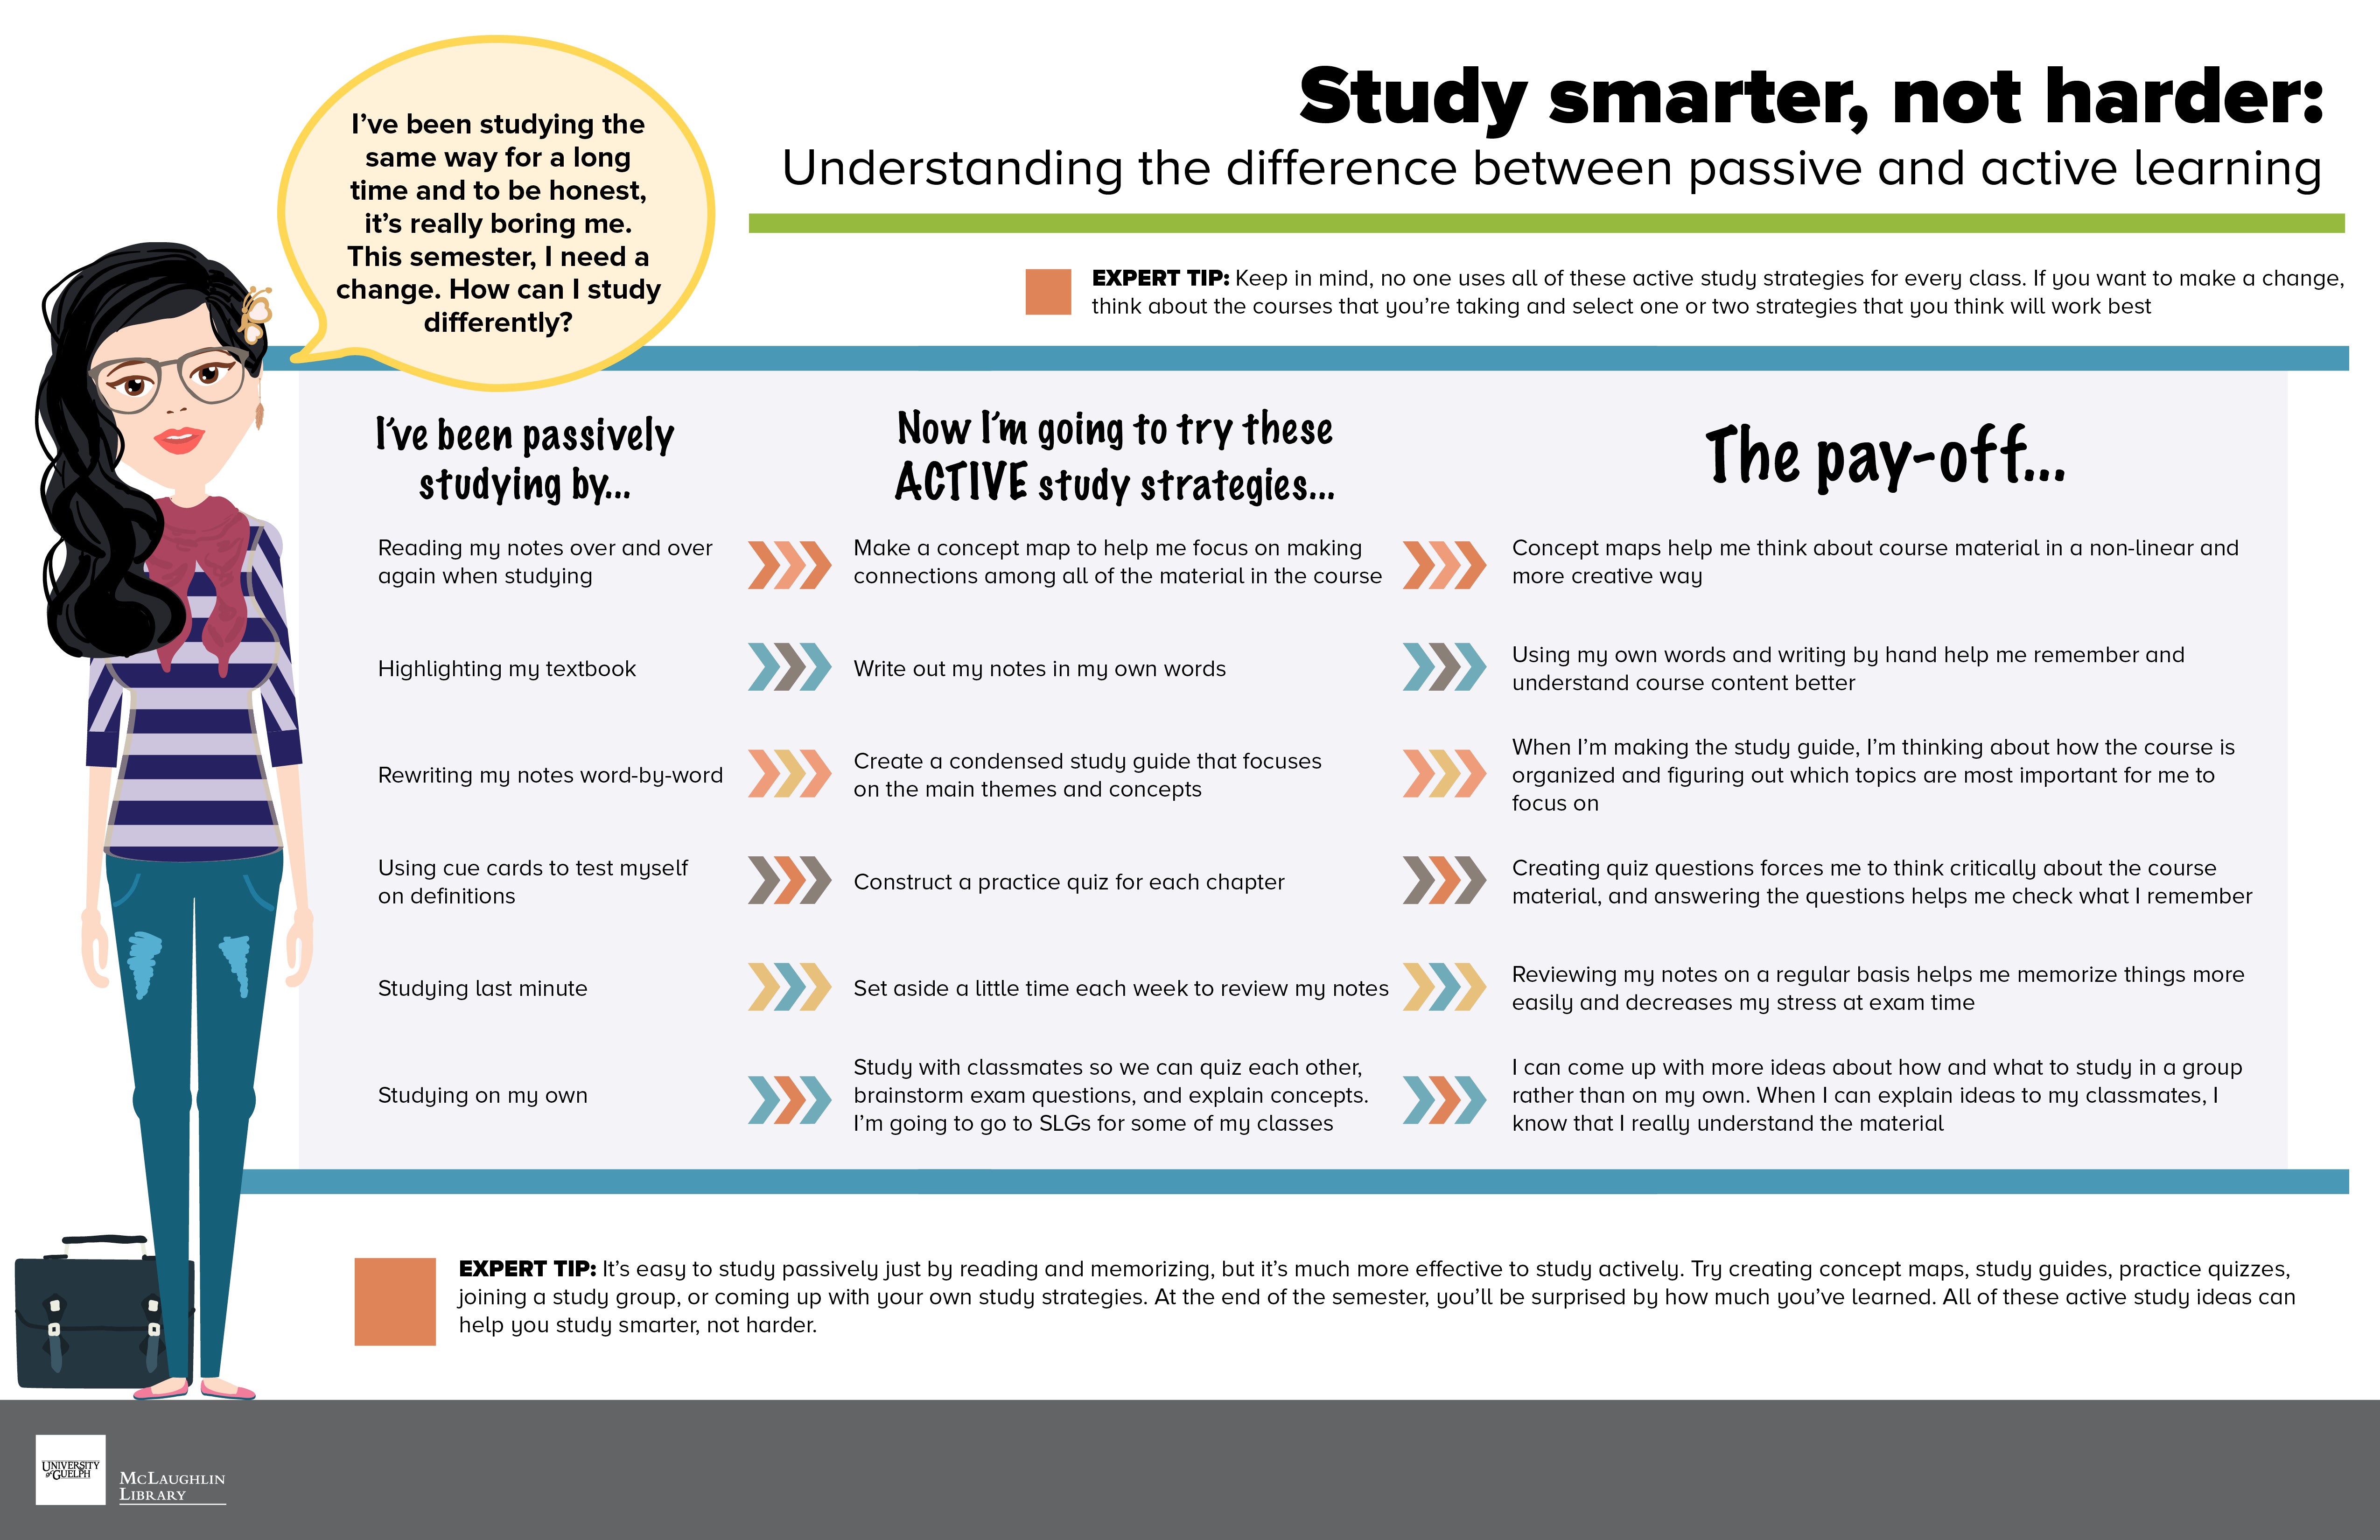 Study Smarter, Not Harder. Transcript available below.